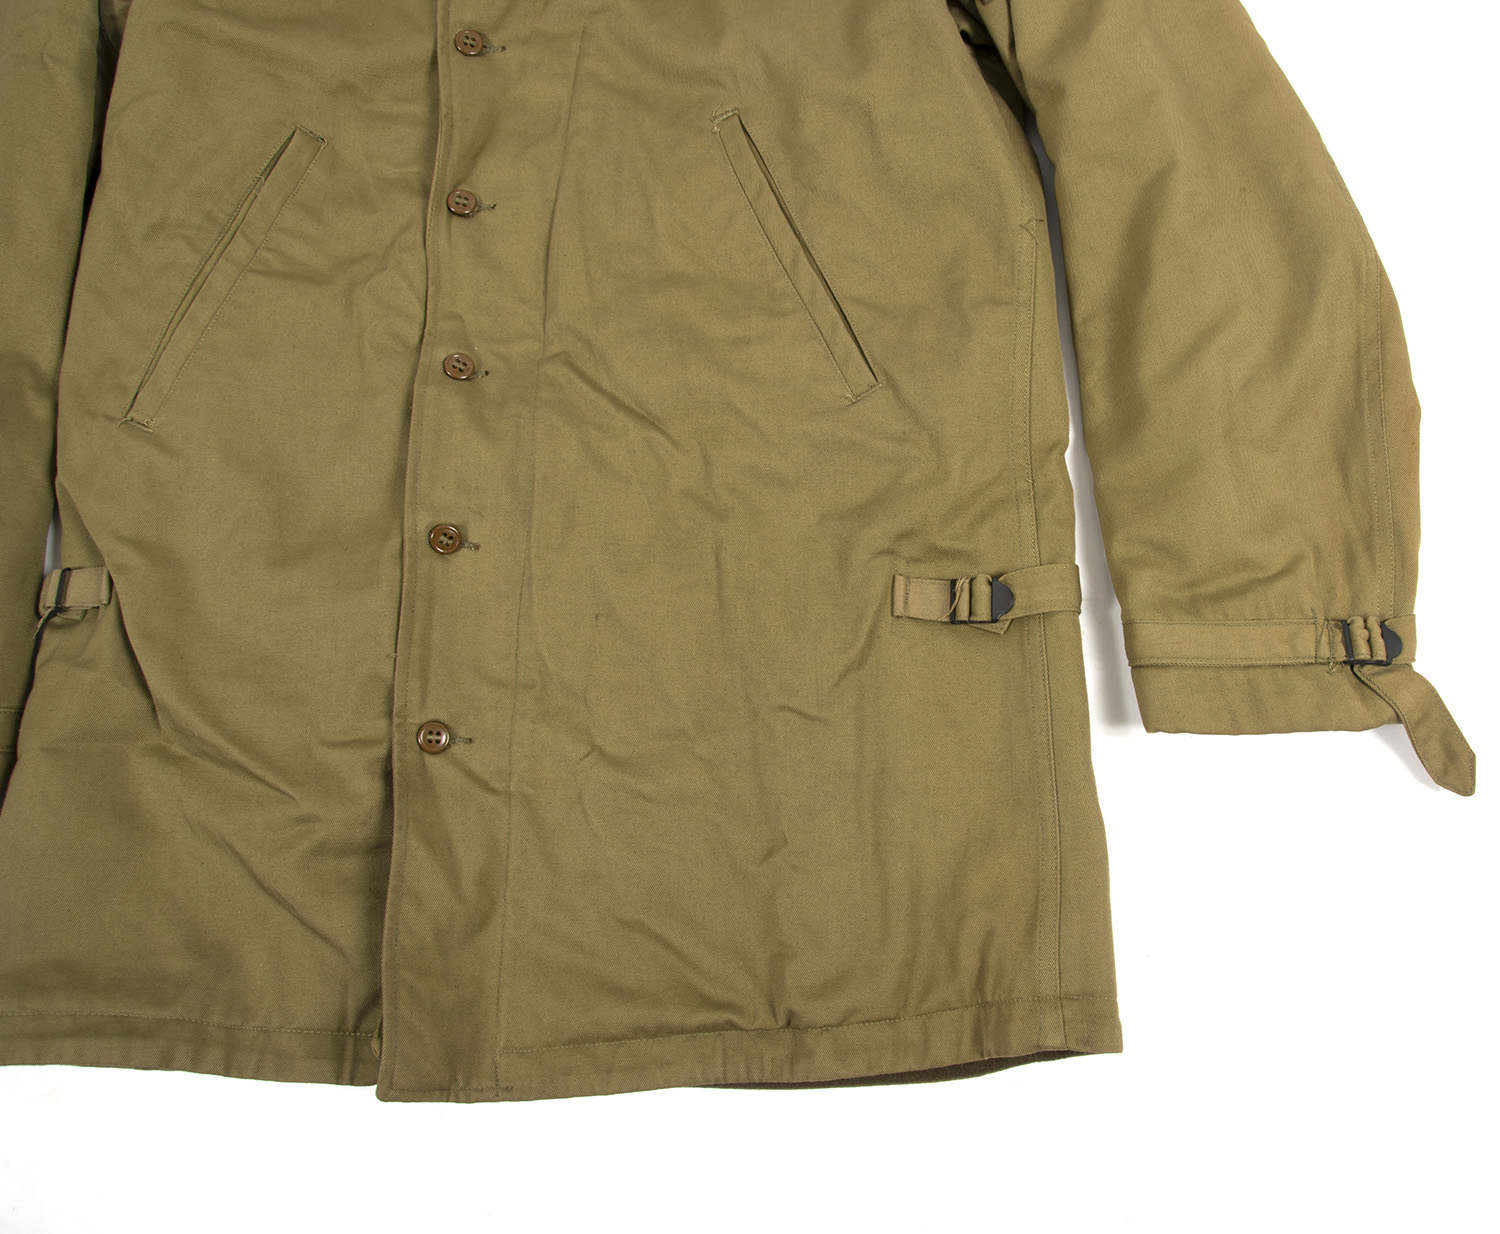 Original Arctic M41 Jacket, size 36R